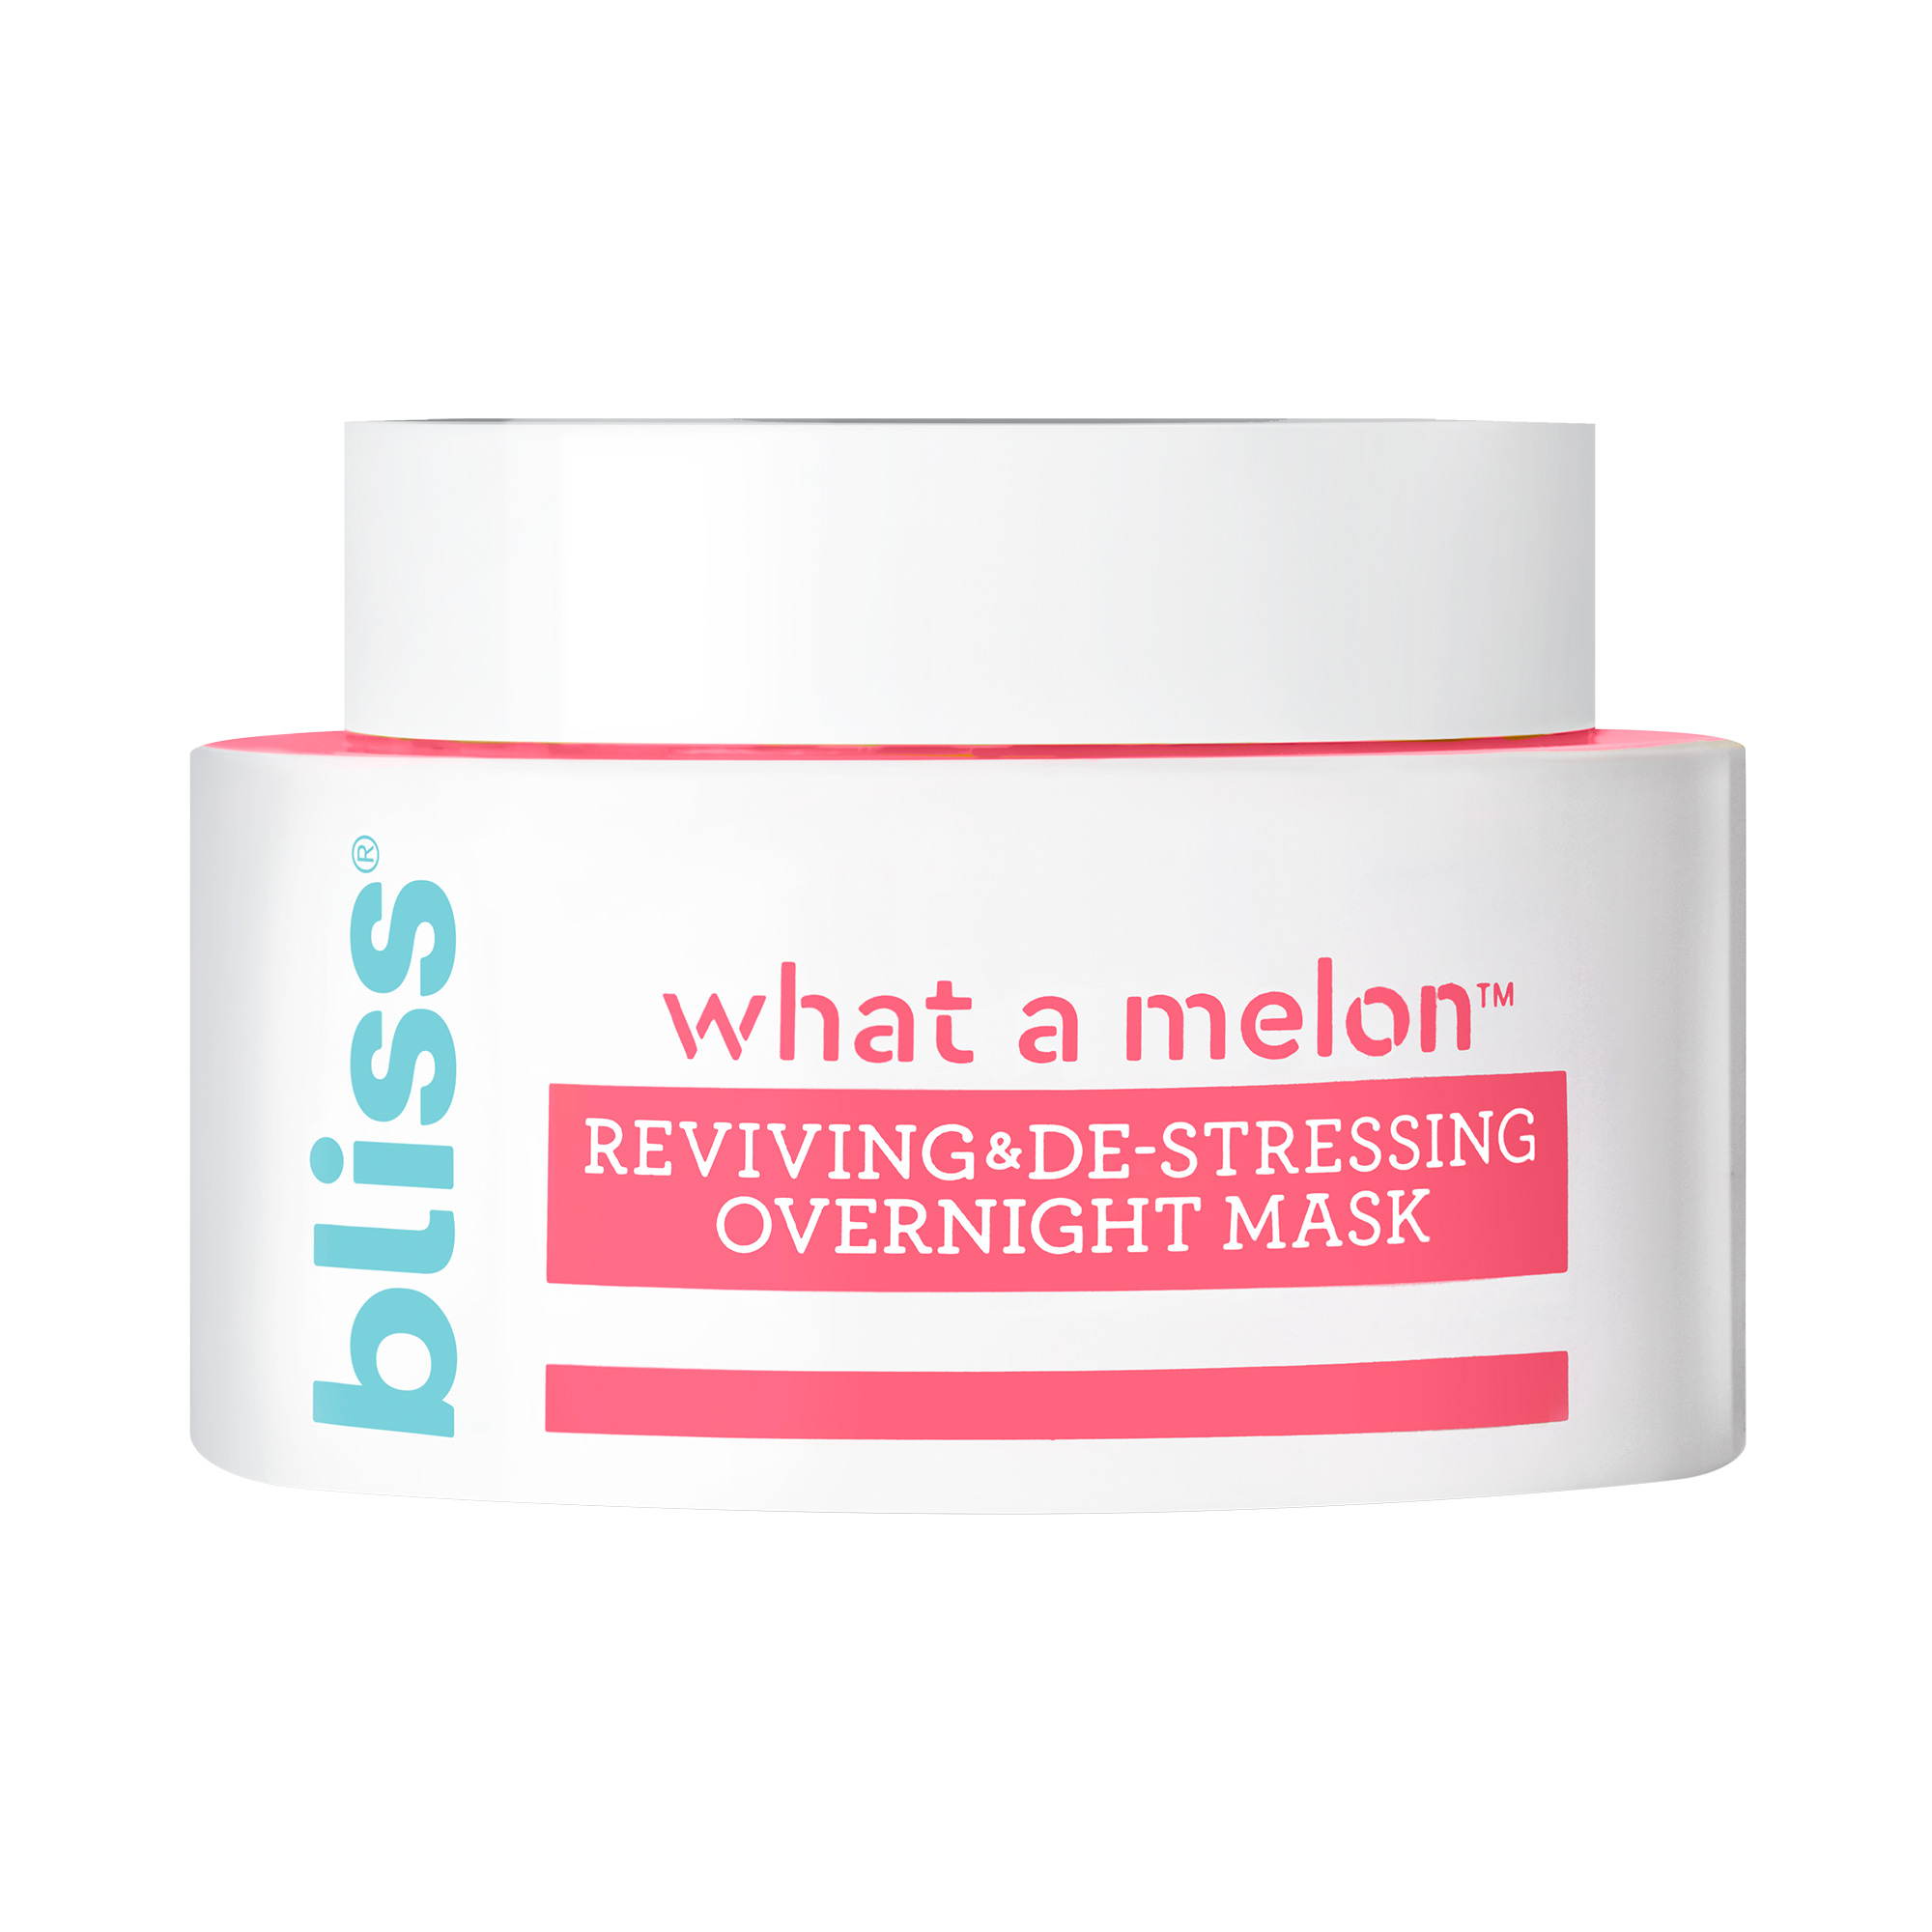 Bliss What A Melon Watermelon Mask, Reviving & De-Stressing Overnight Watermelon Mask, 1.7 fl oz - image 1 of 5